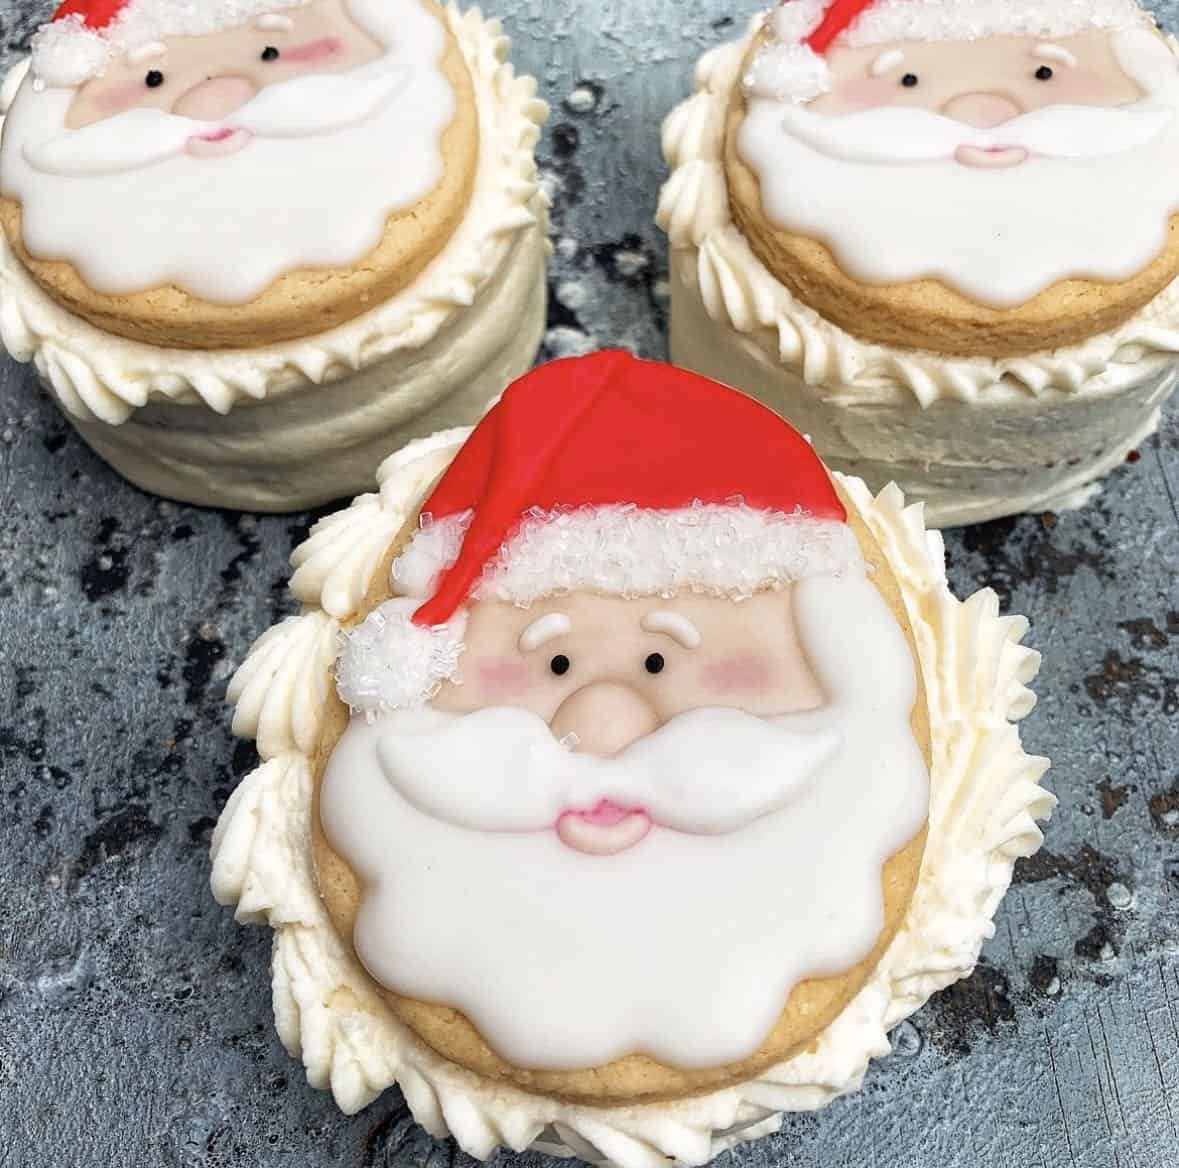 Three vegan santa claus cookies with icing on top.